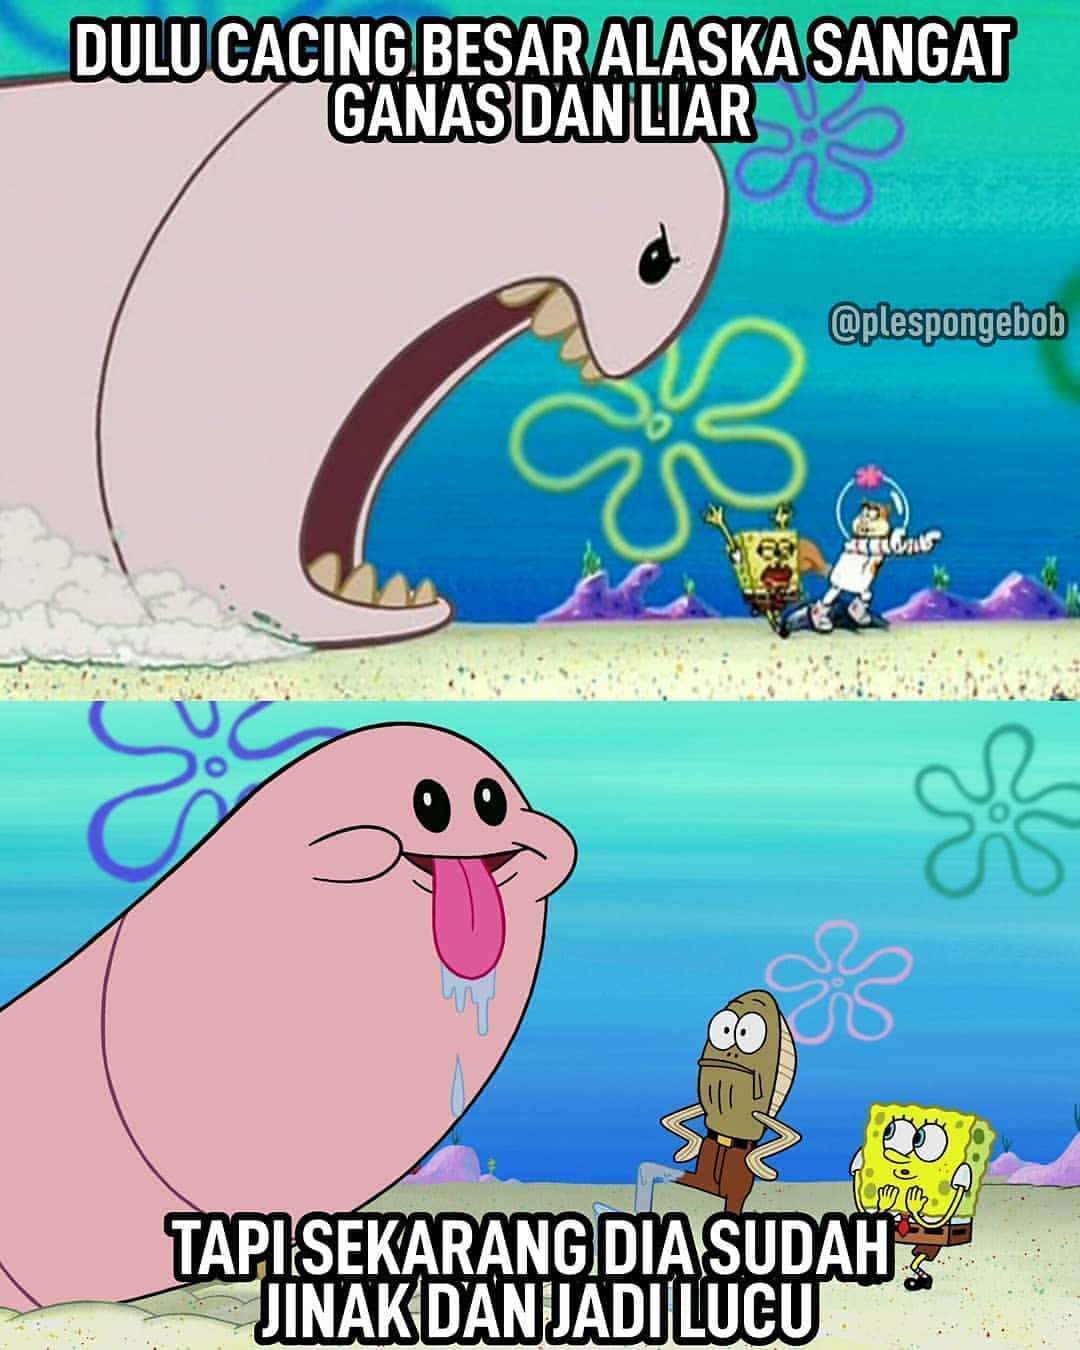 Cacing besar alaska spongebob